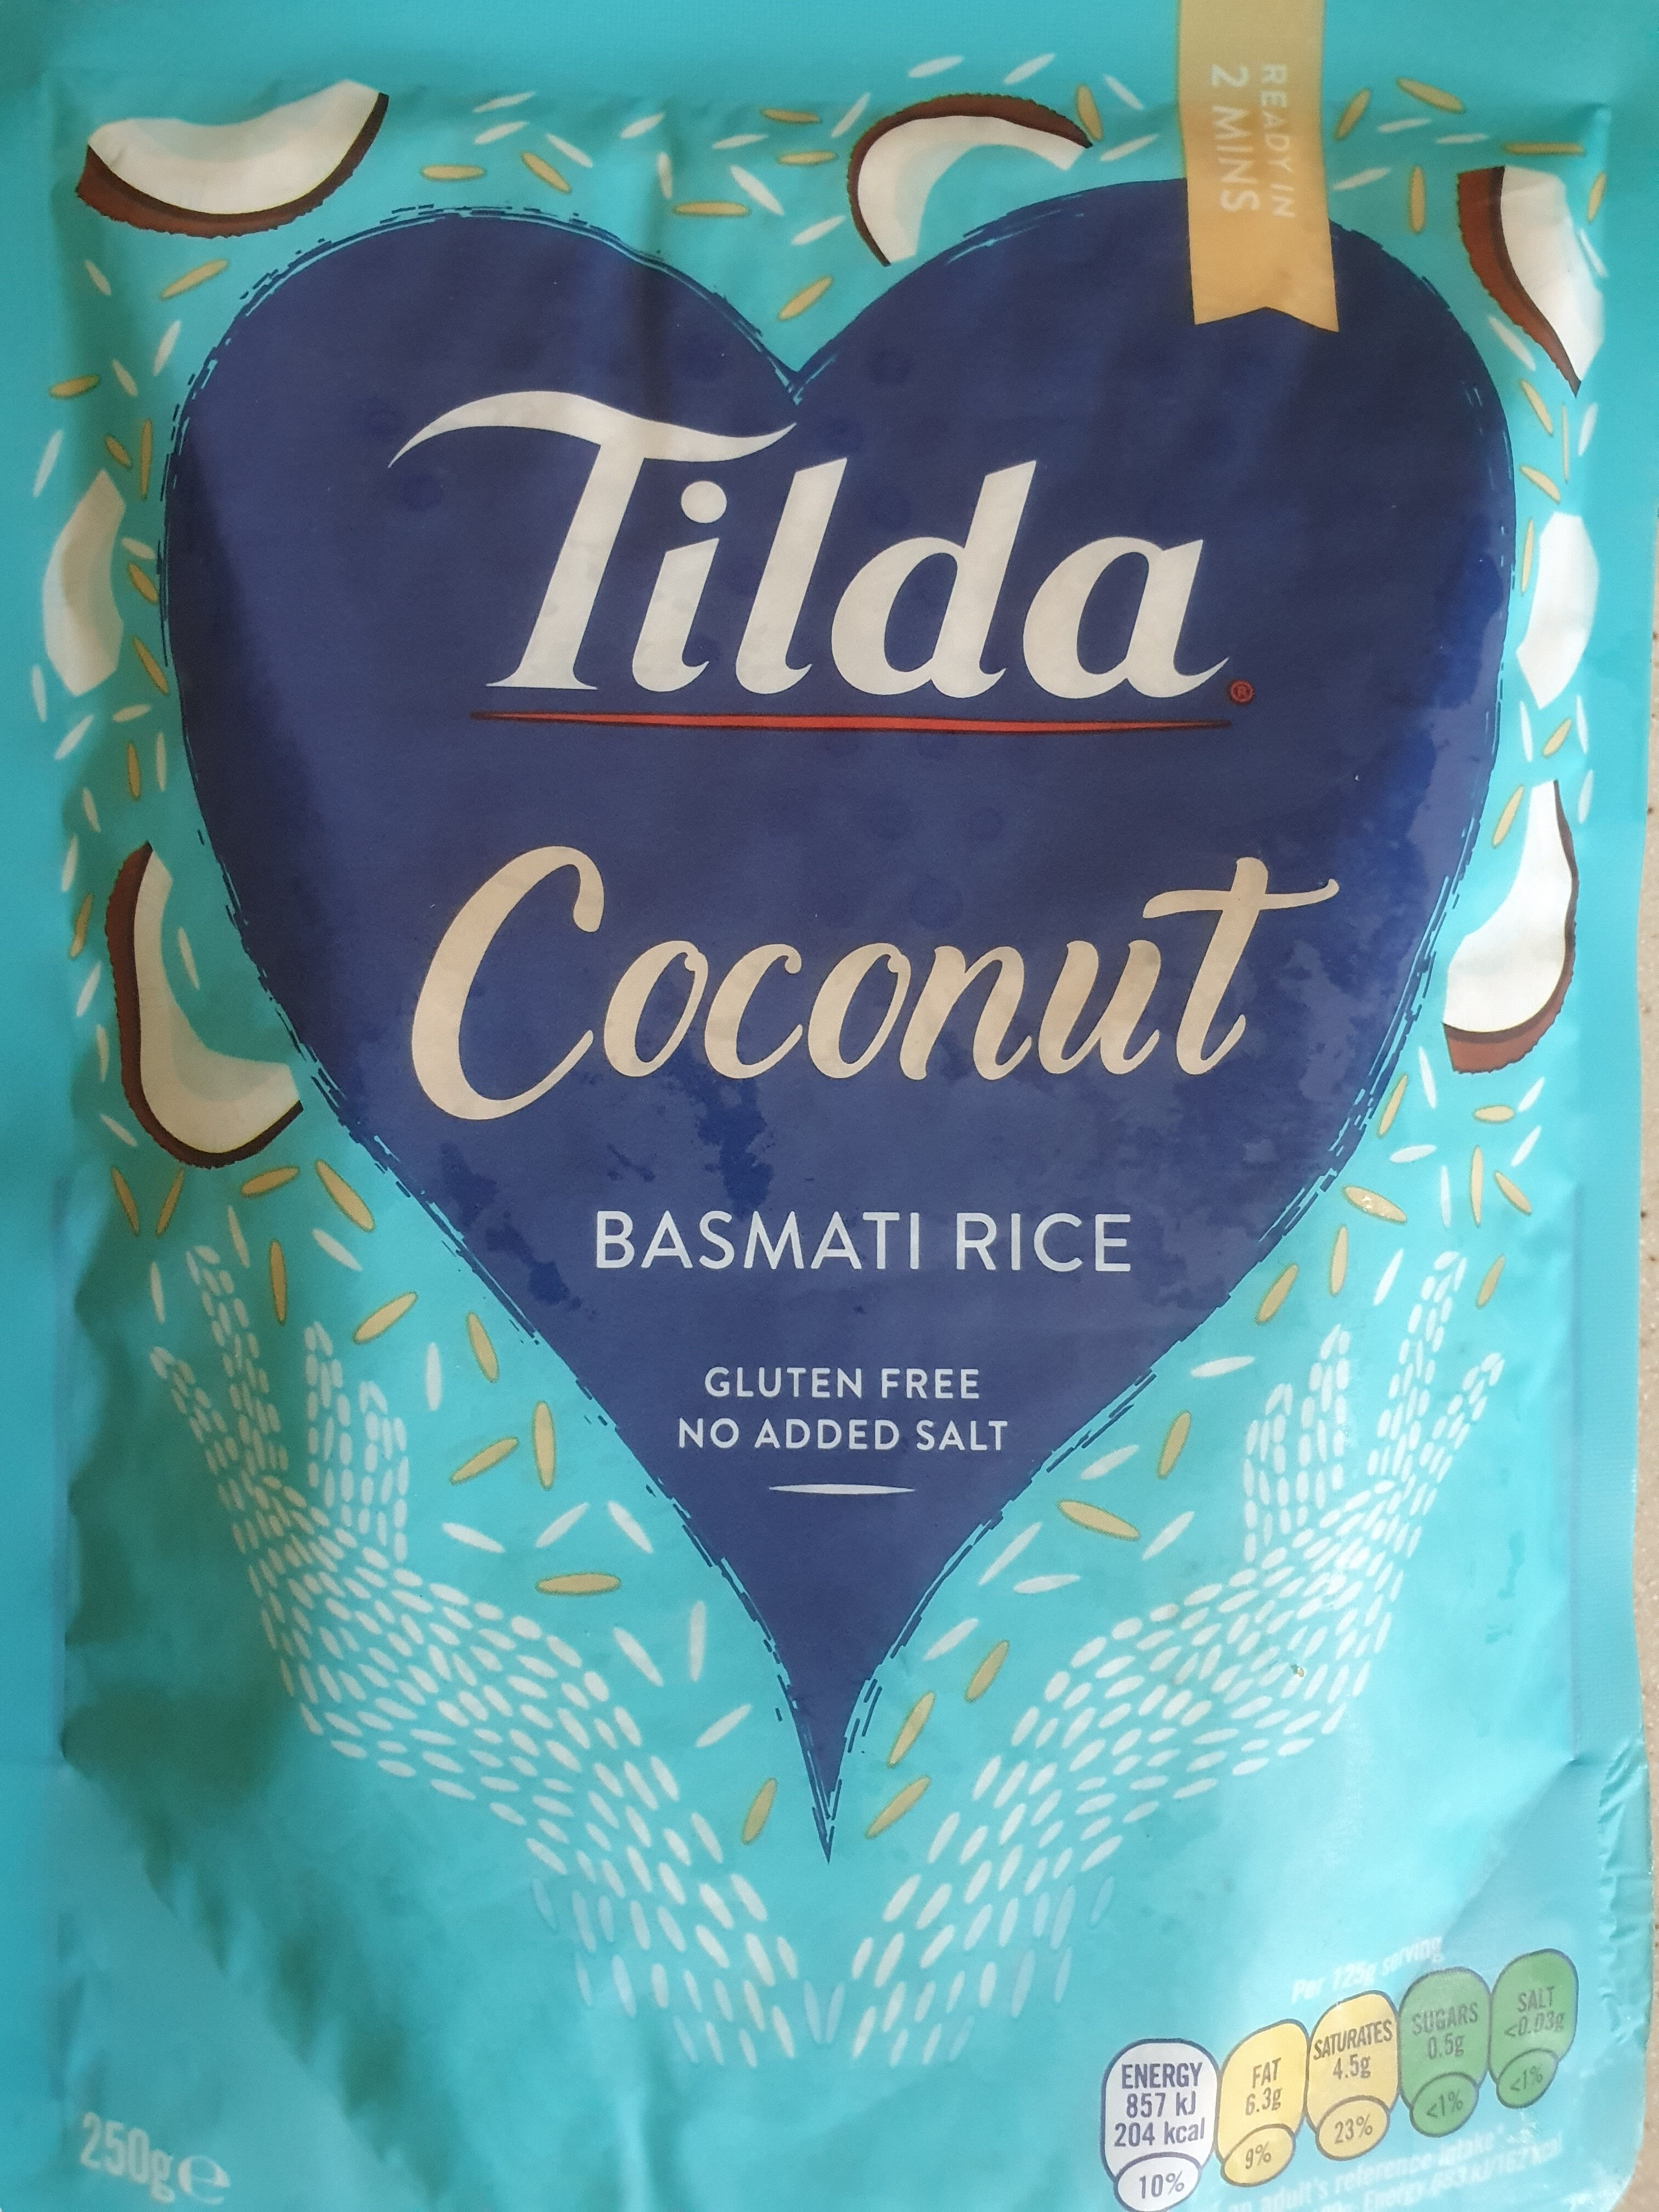 Tilda Coconut Basmati Rice - Product - en